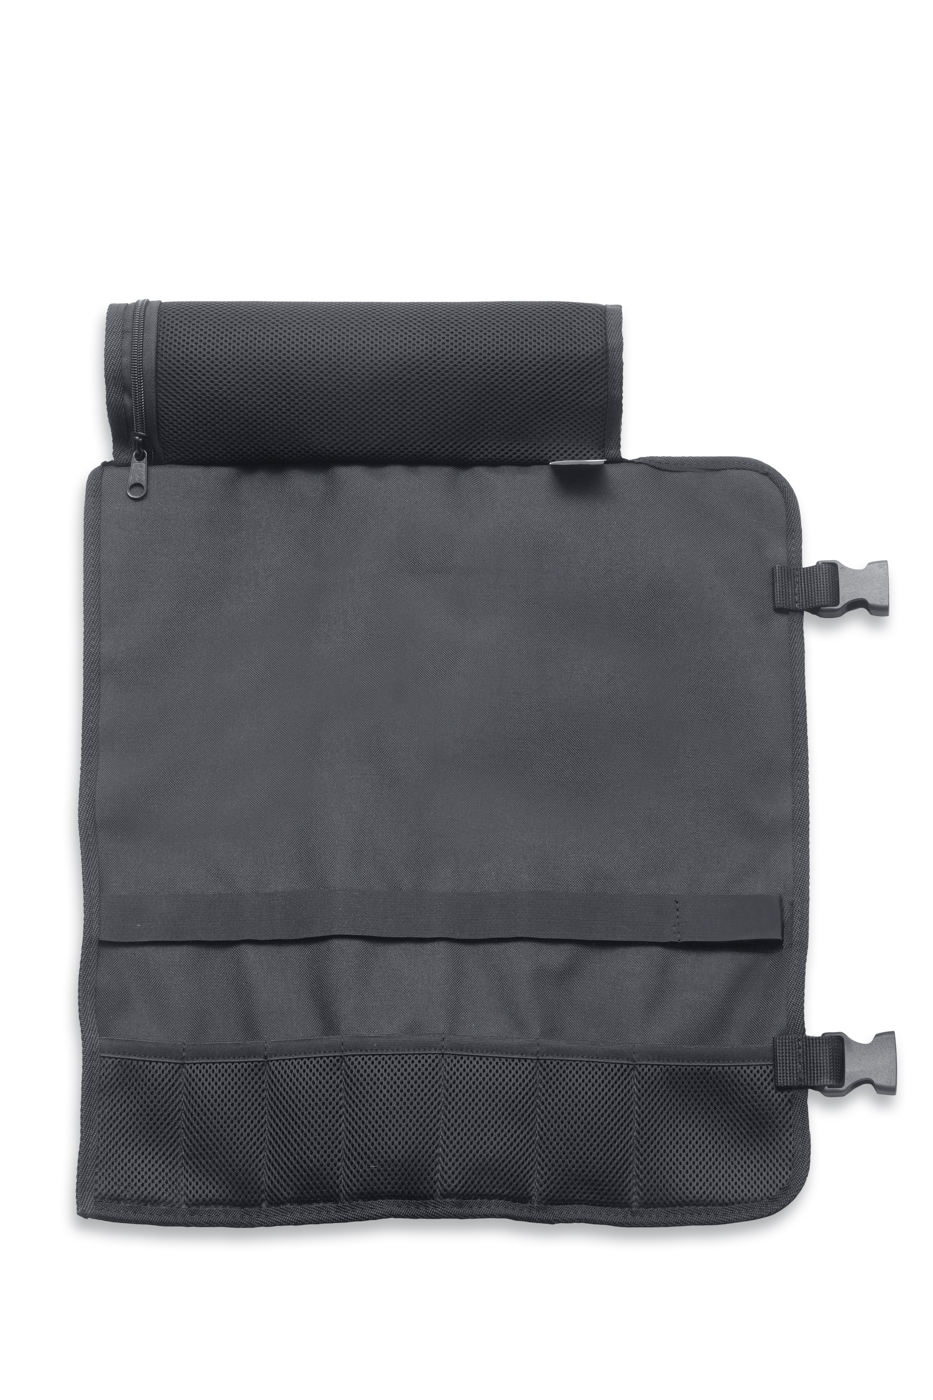 Dick schwarze Stoffrolltasche 50(L) x 43(B)cm